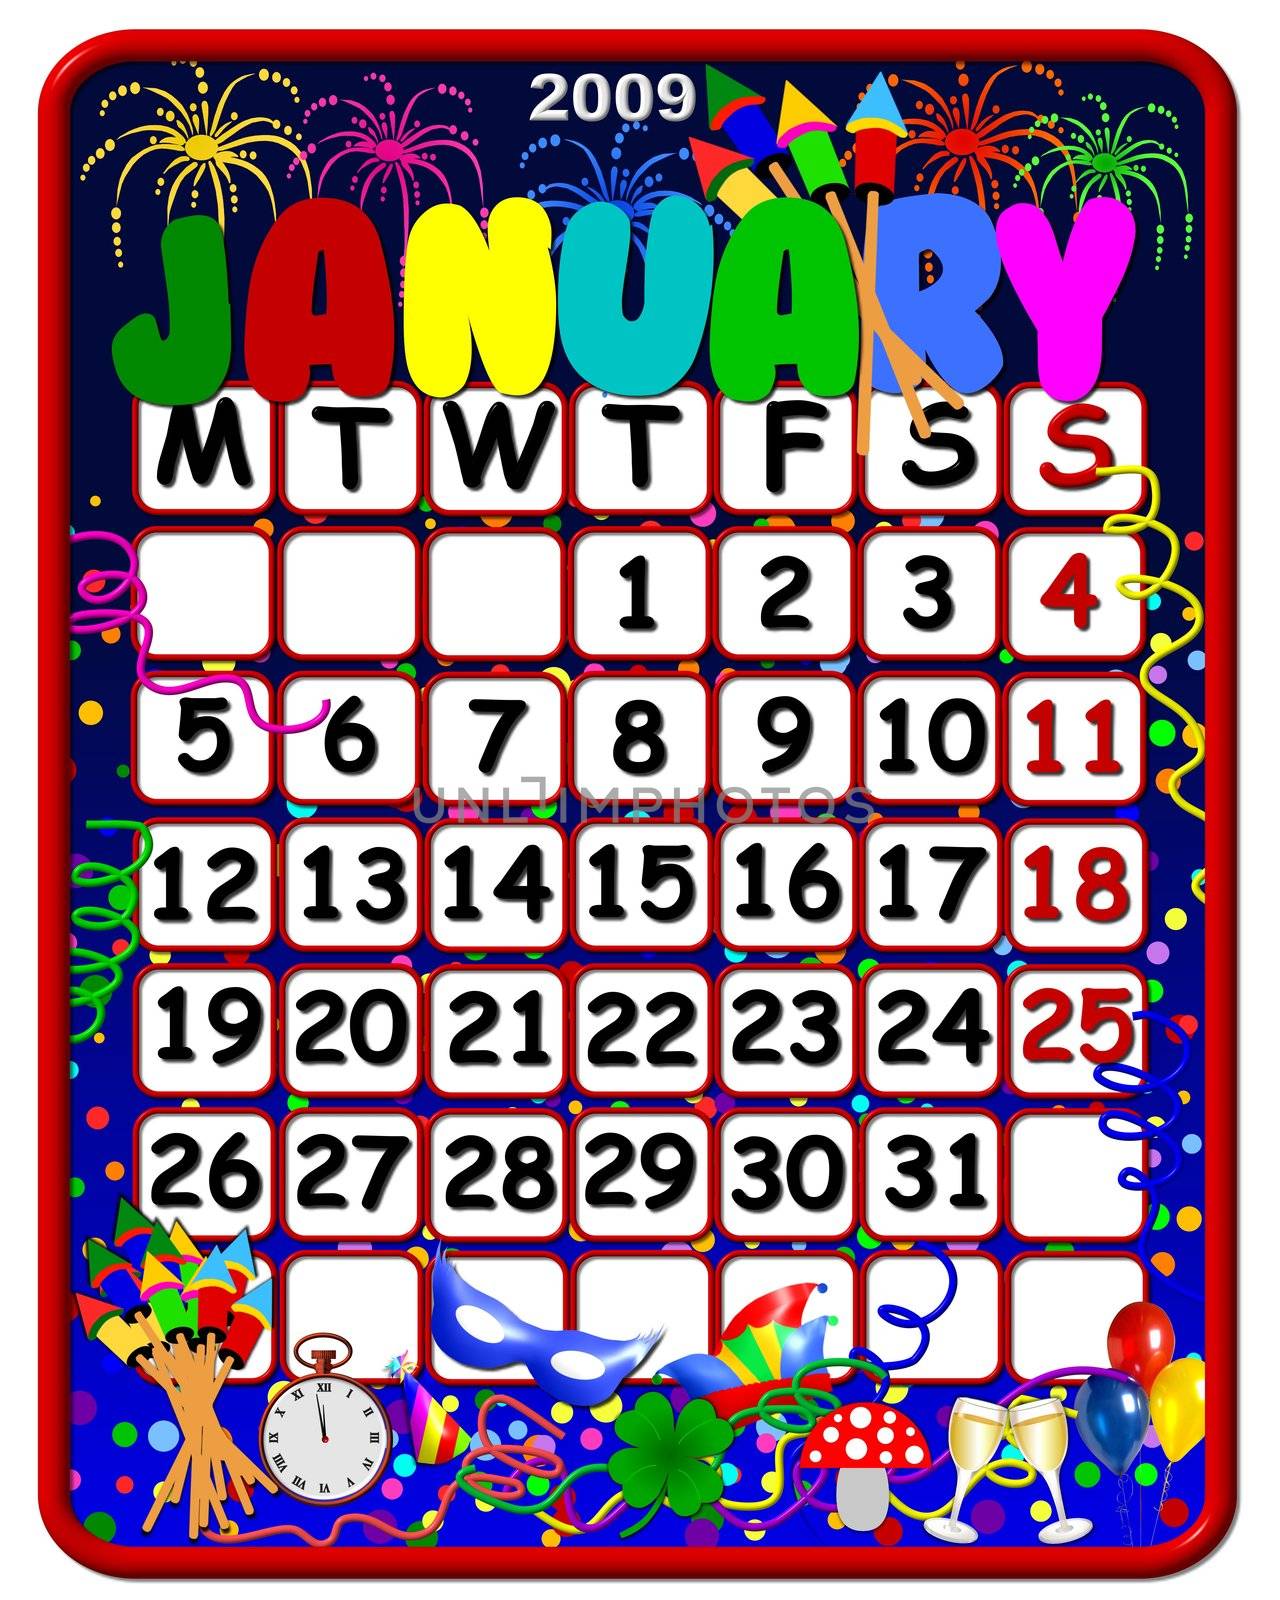 funny calendar january 2009 by peromarketing